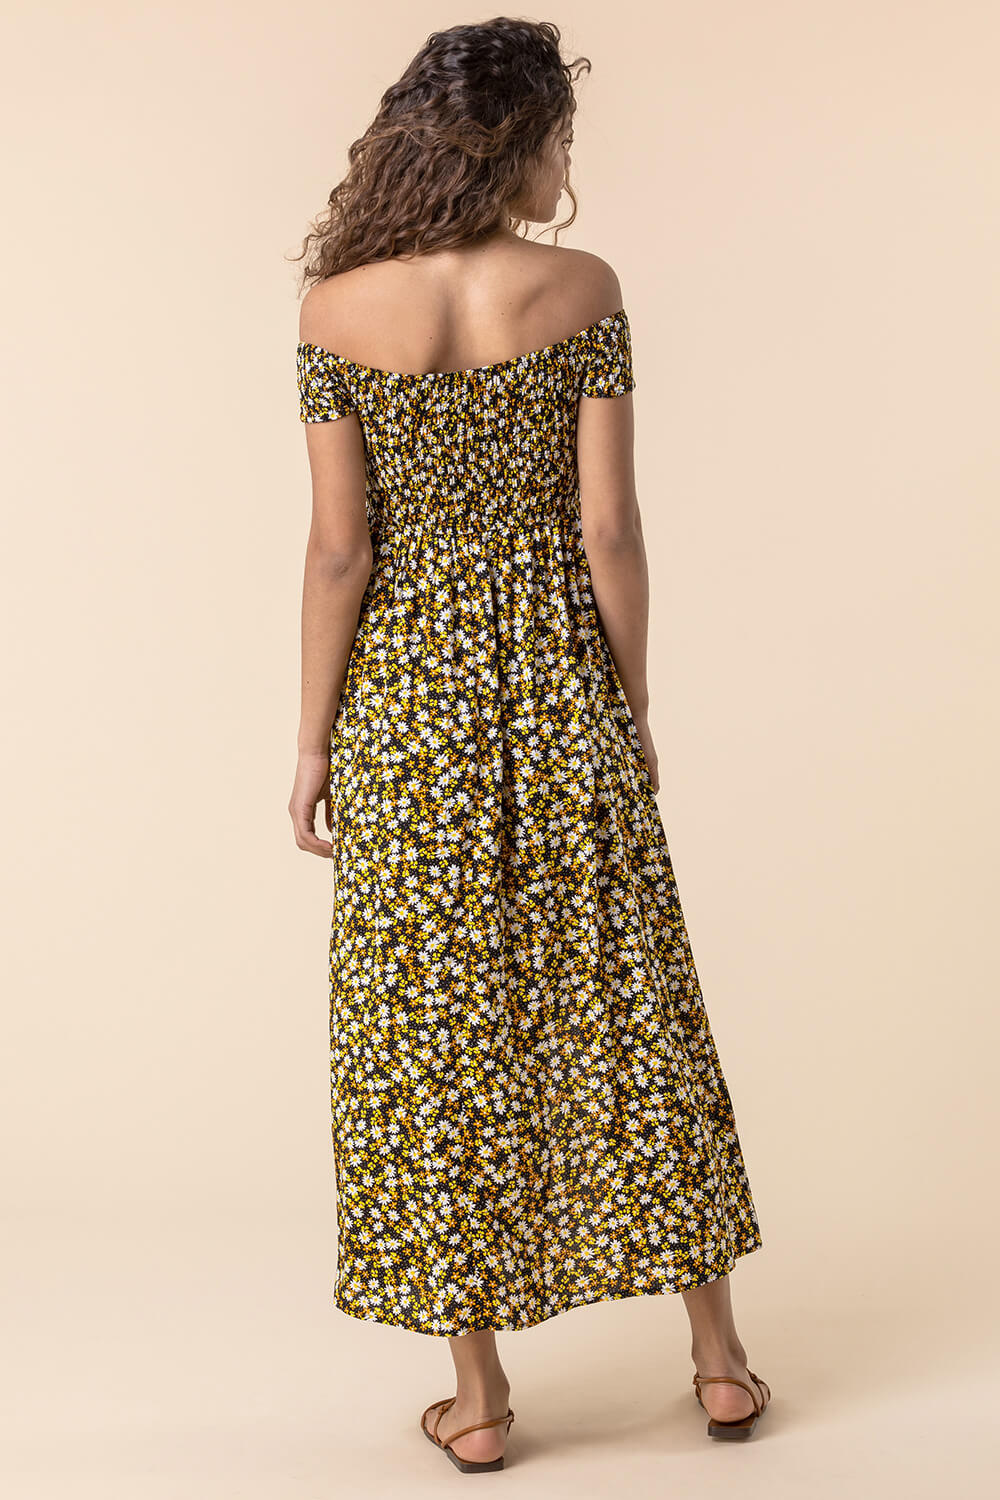 Multi  Shirred Ditsy Floral Print Bardot Dress, Image 2 of 5